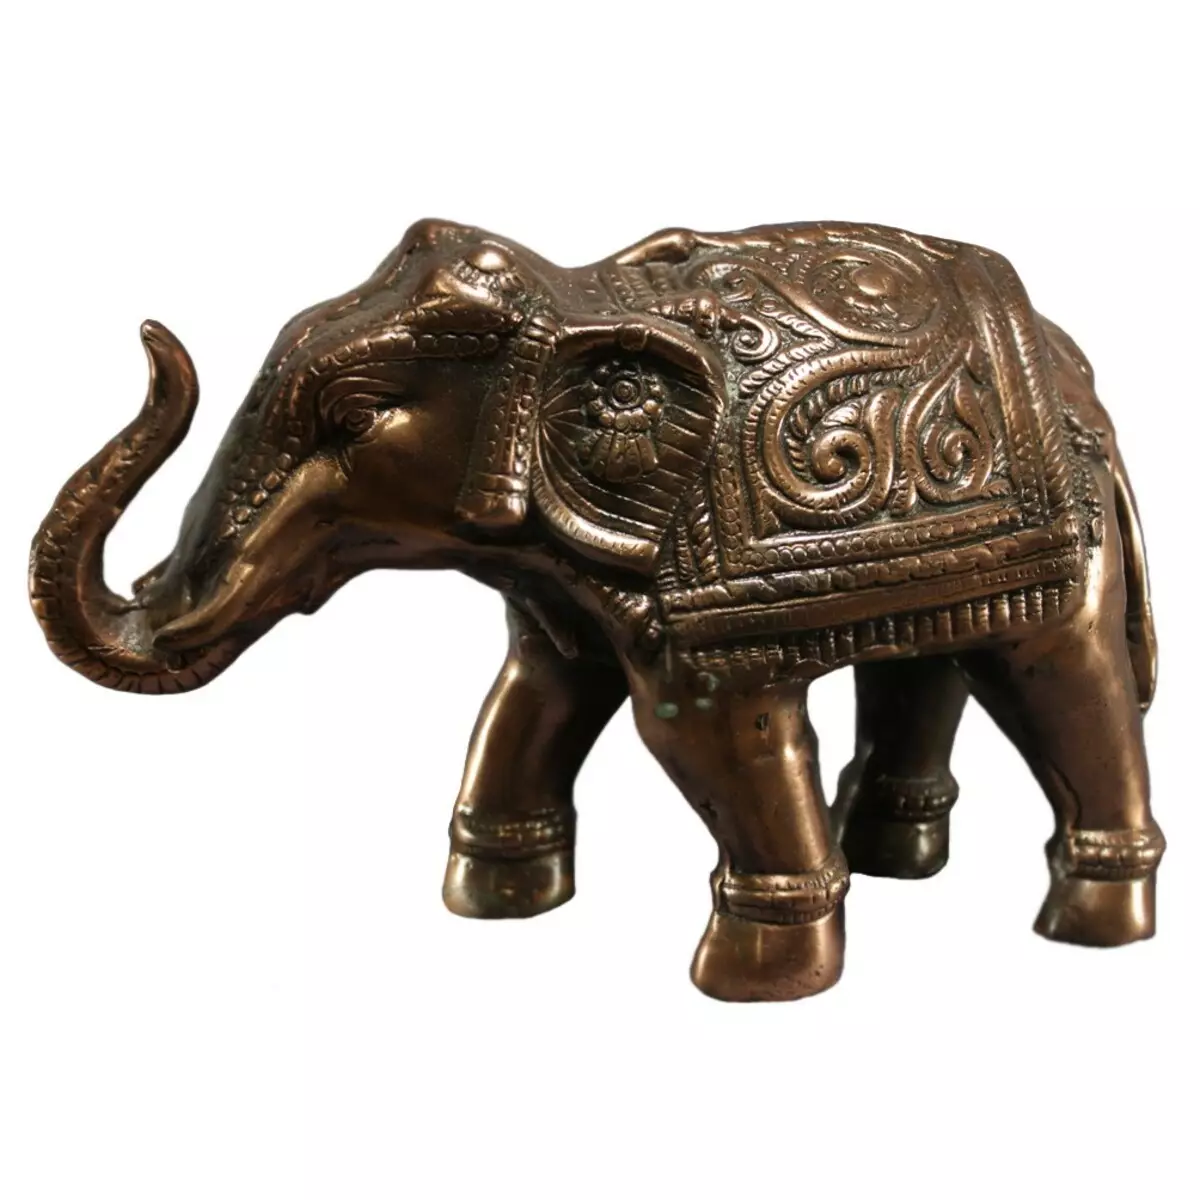 Символ слона значение